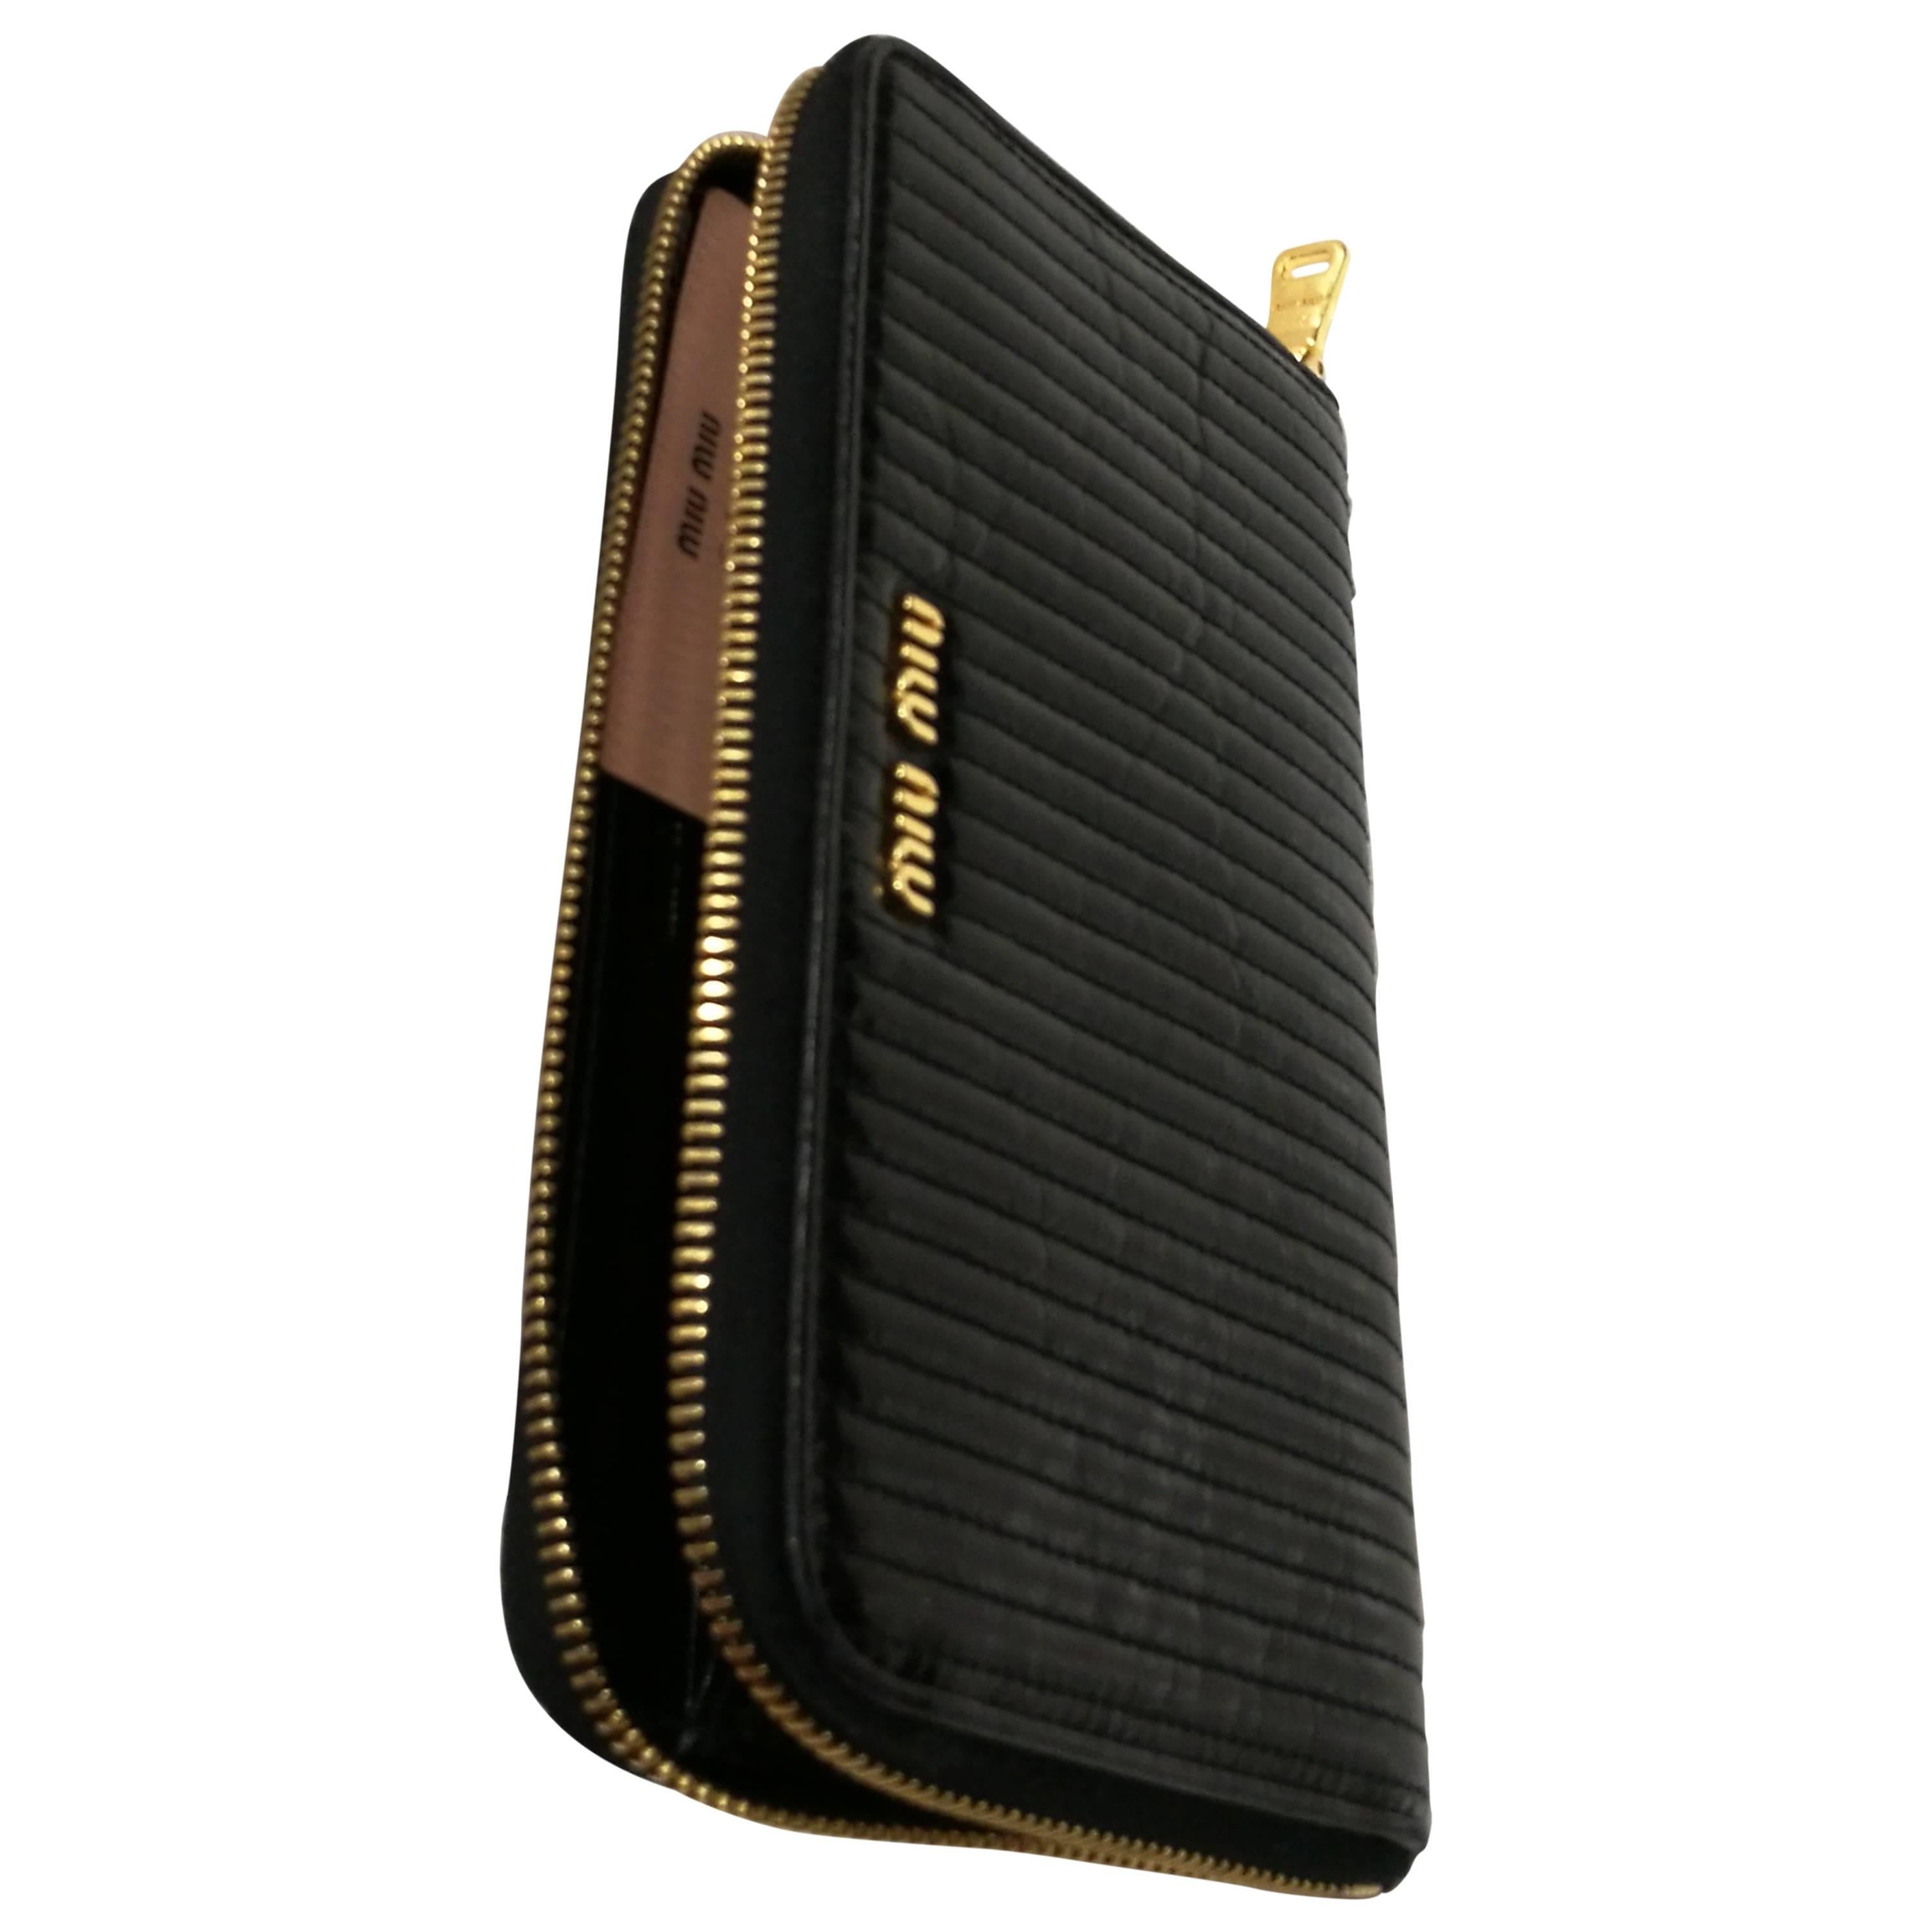 Miu Miu black wallet gold tone hardware